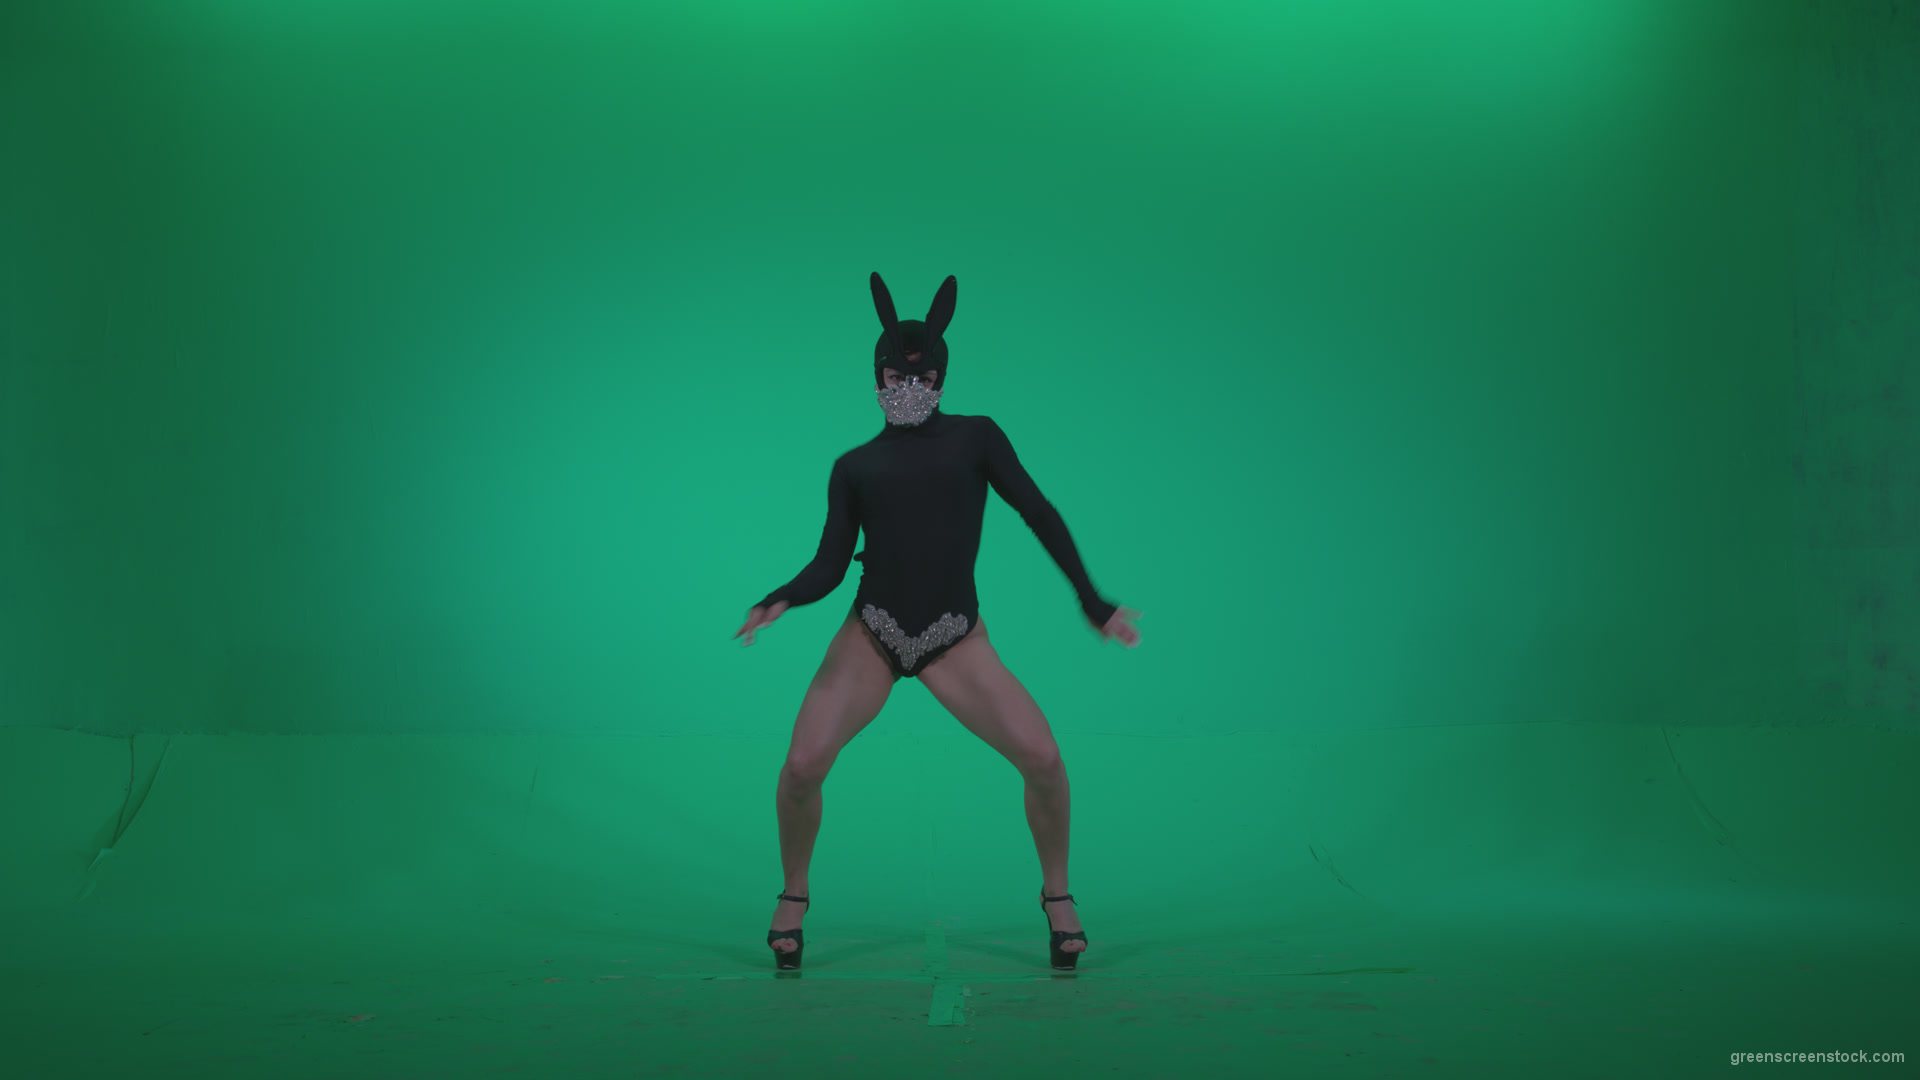 Go-go-Dancer-Black-Rabbit-u9-Green-Screen-Video-Footage_004 Green Screen Stock